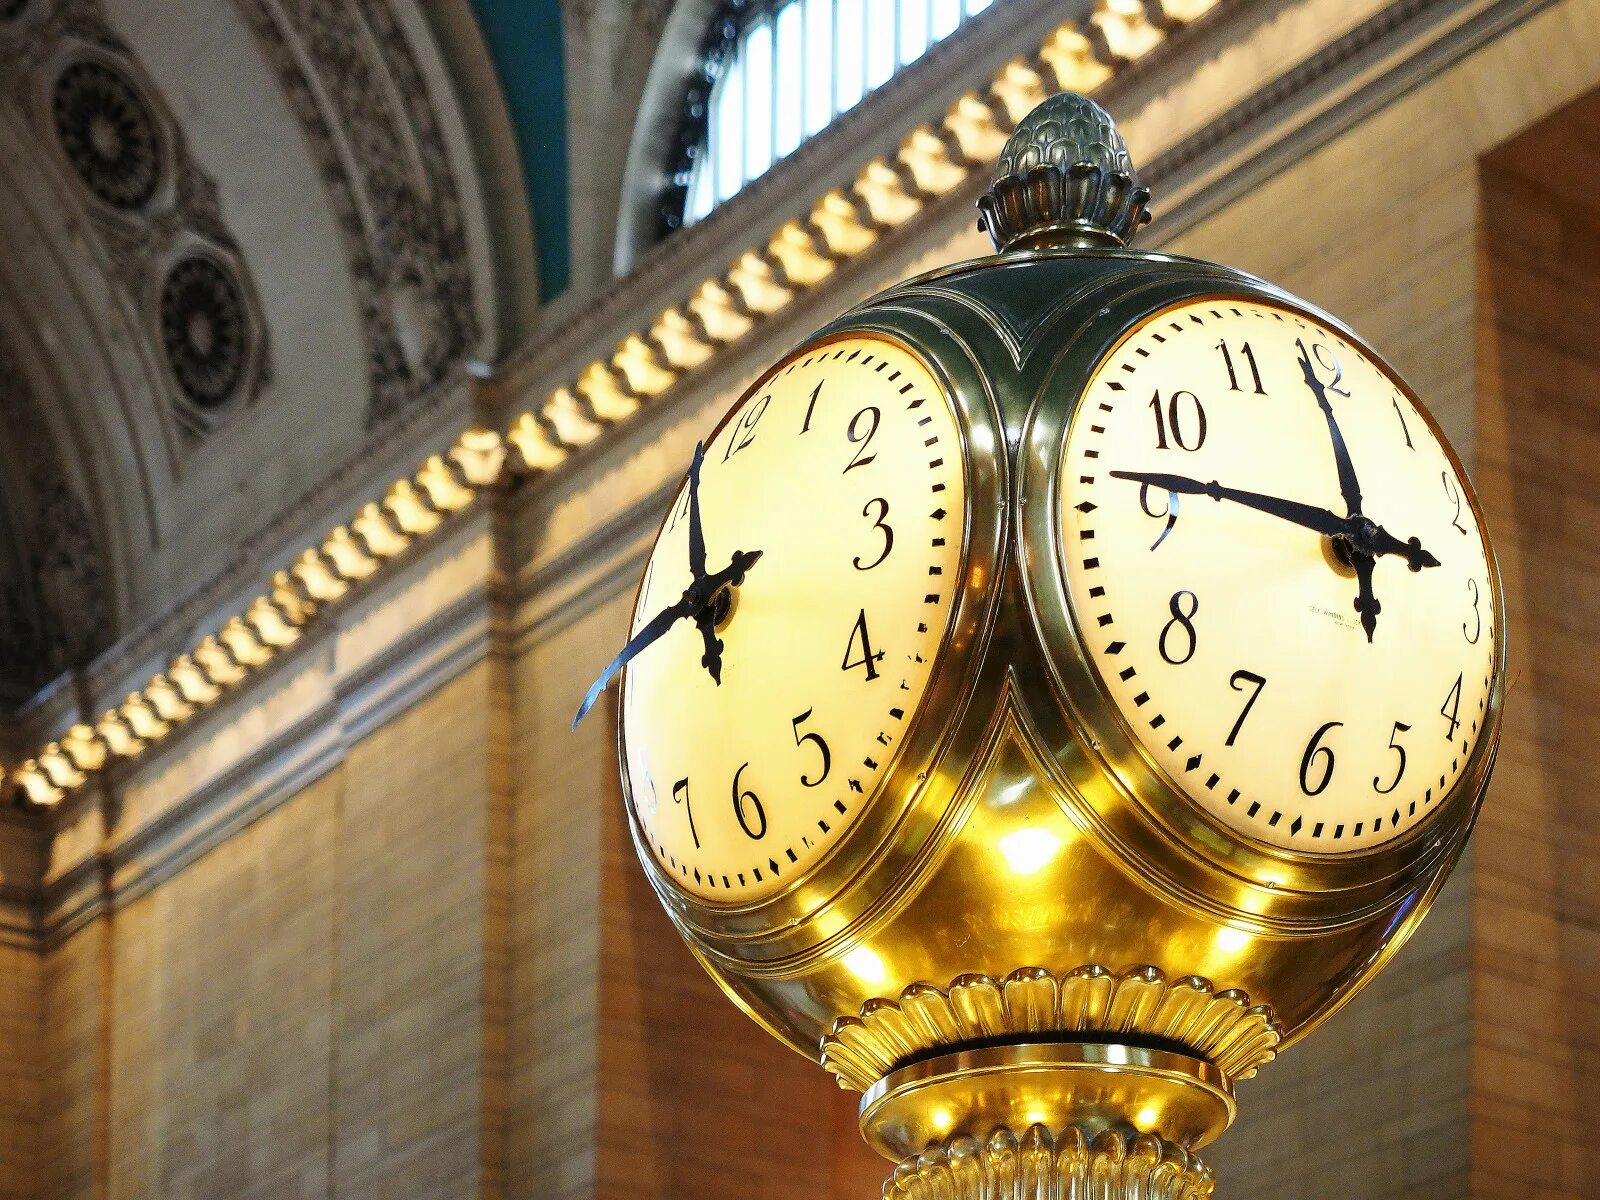 Сделай часы на станции ярче. Grand Central Terminal New York часы. Часы Grand Central Terminal Berlin. Часы на вокзале. Старинные часы.